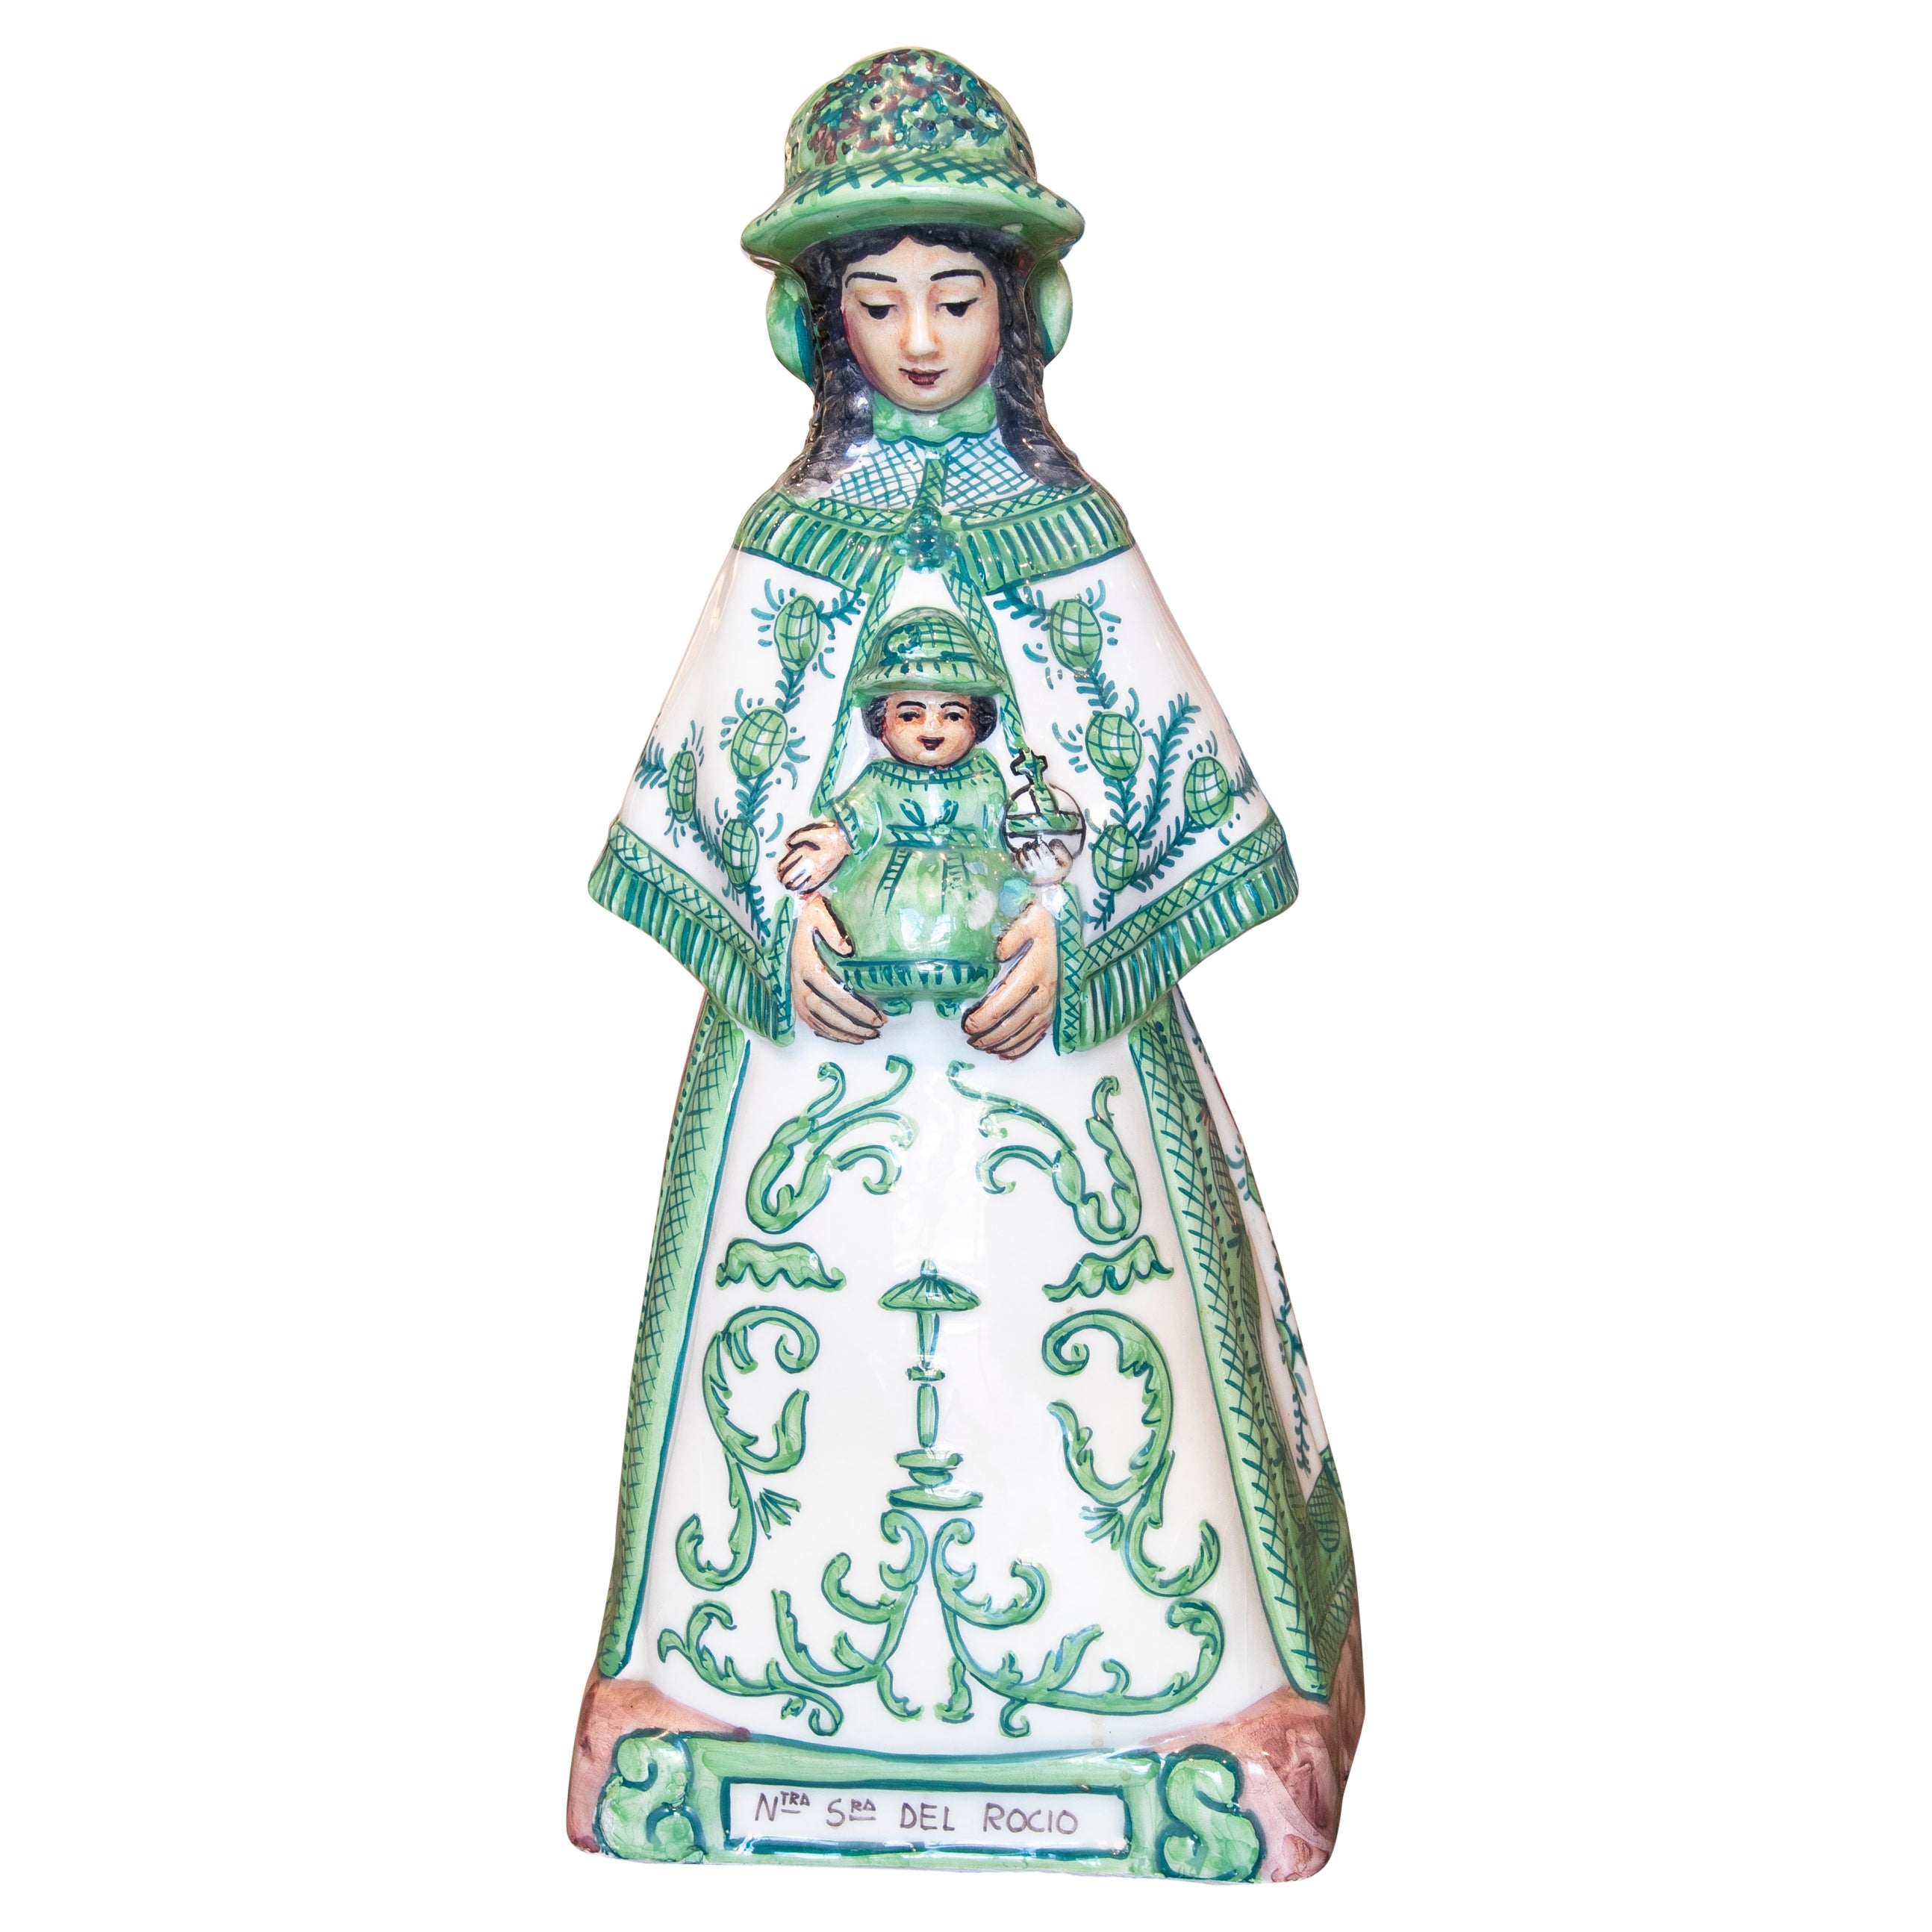 1970s Glazed Ceramic Sculpture of the Virgen del Rocio